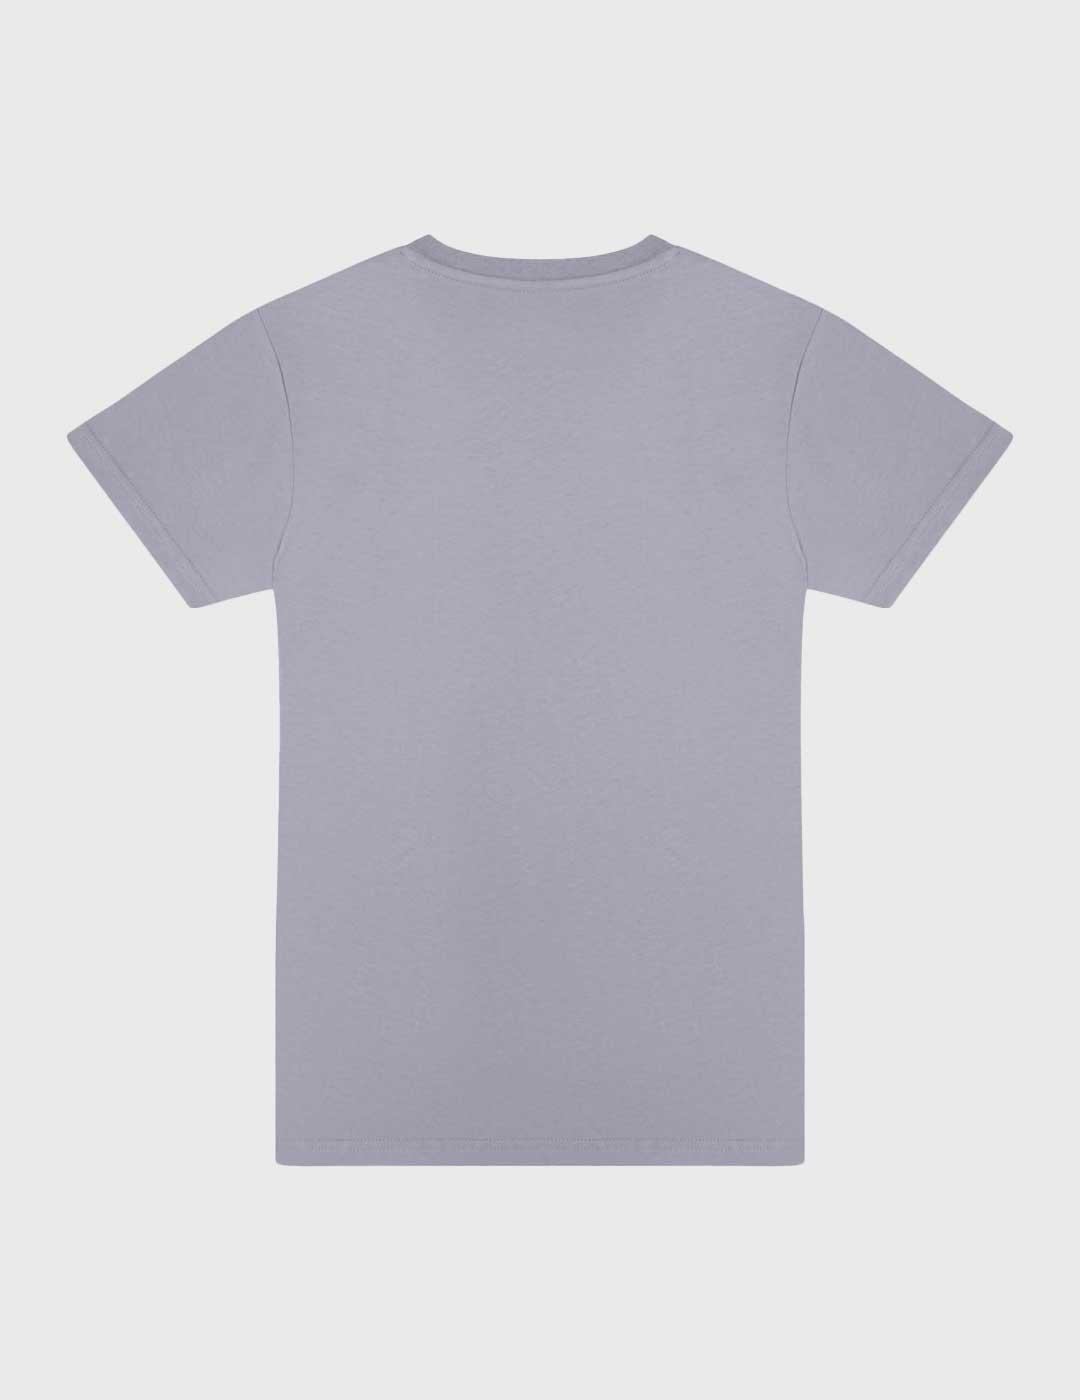 Camiseta Ellesse Jet Junior gris para niño y niña